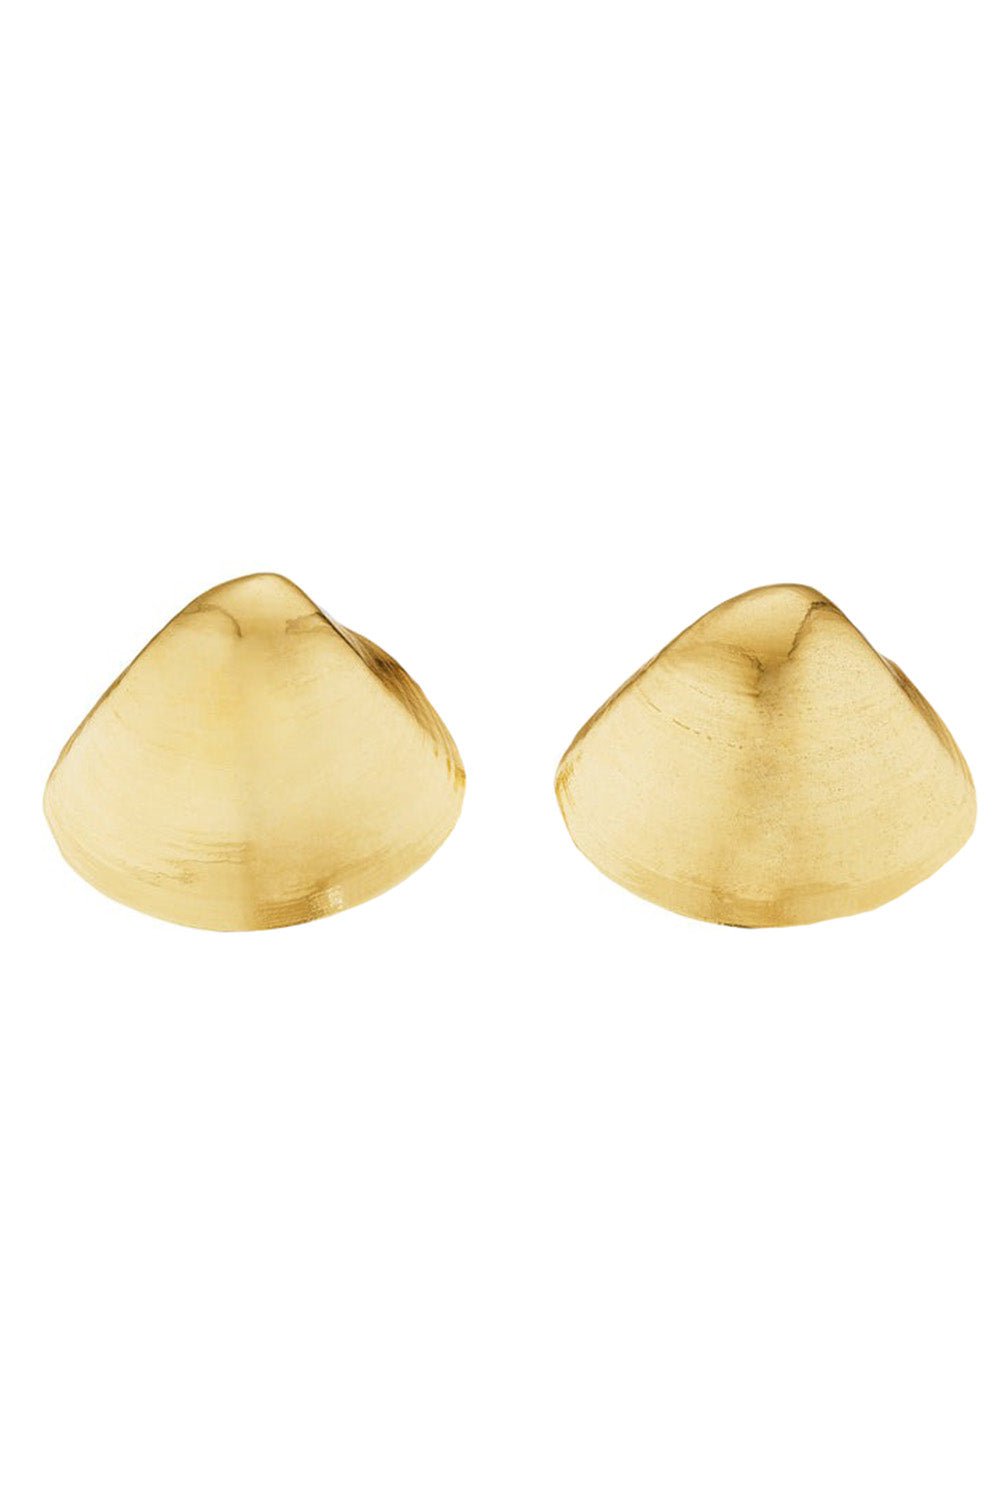 CADAR-70's Shell Earrings-YELLOW GOLD